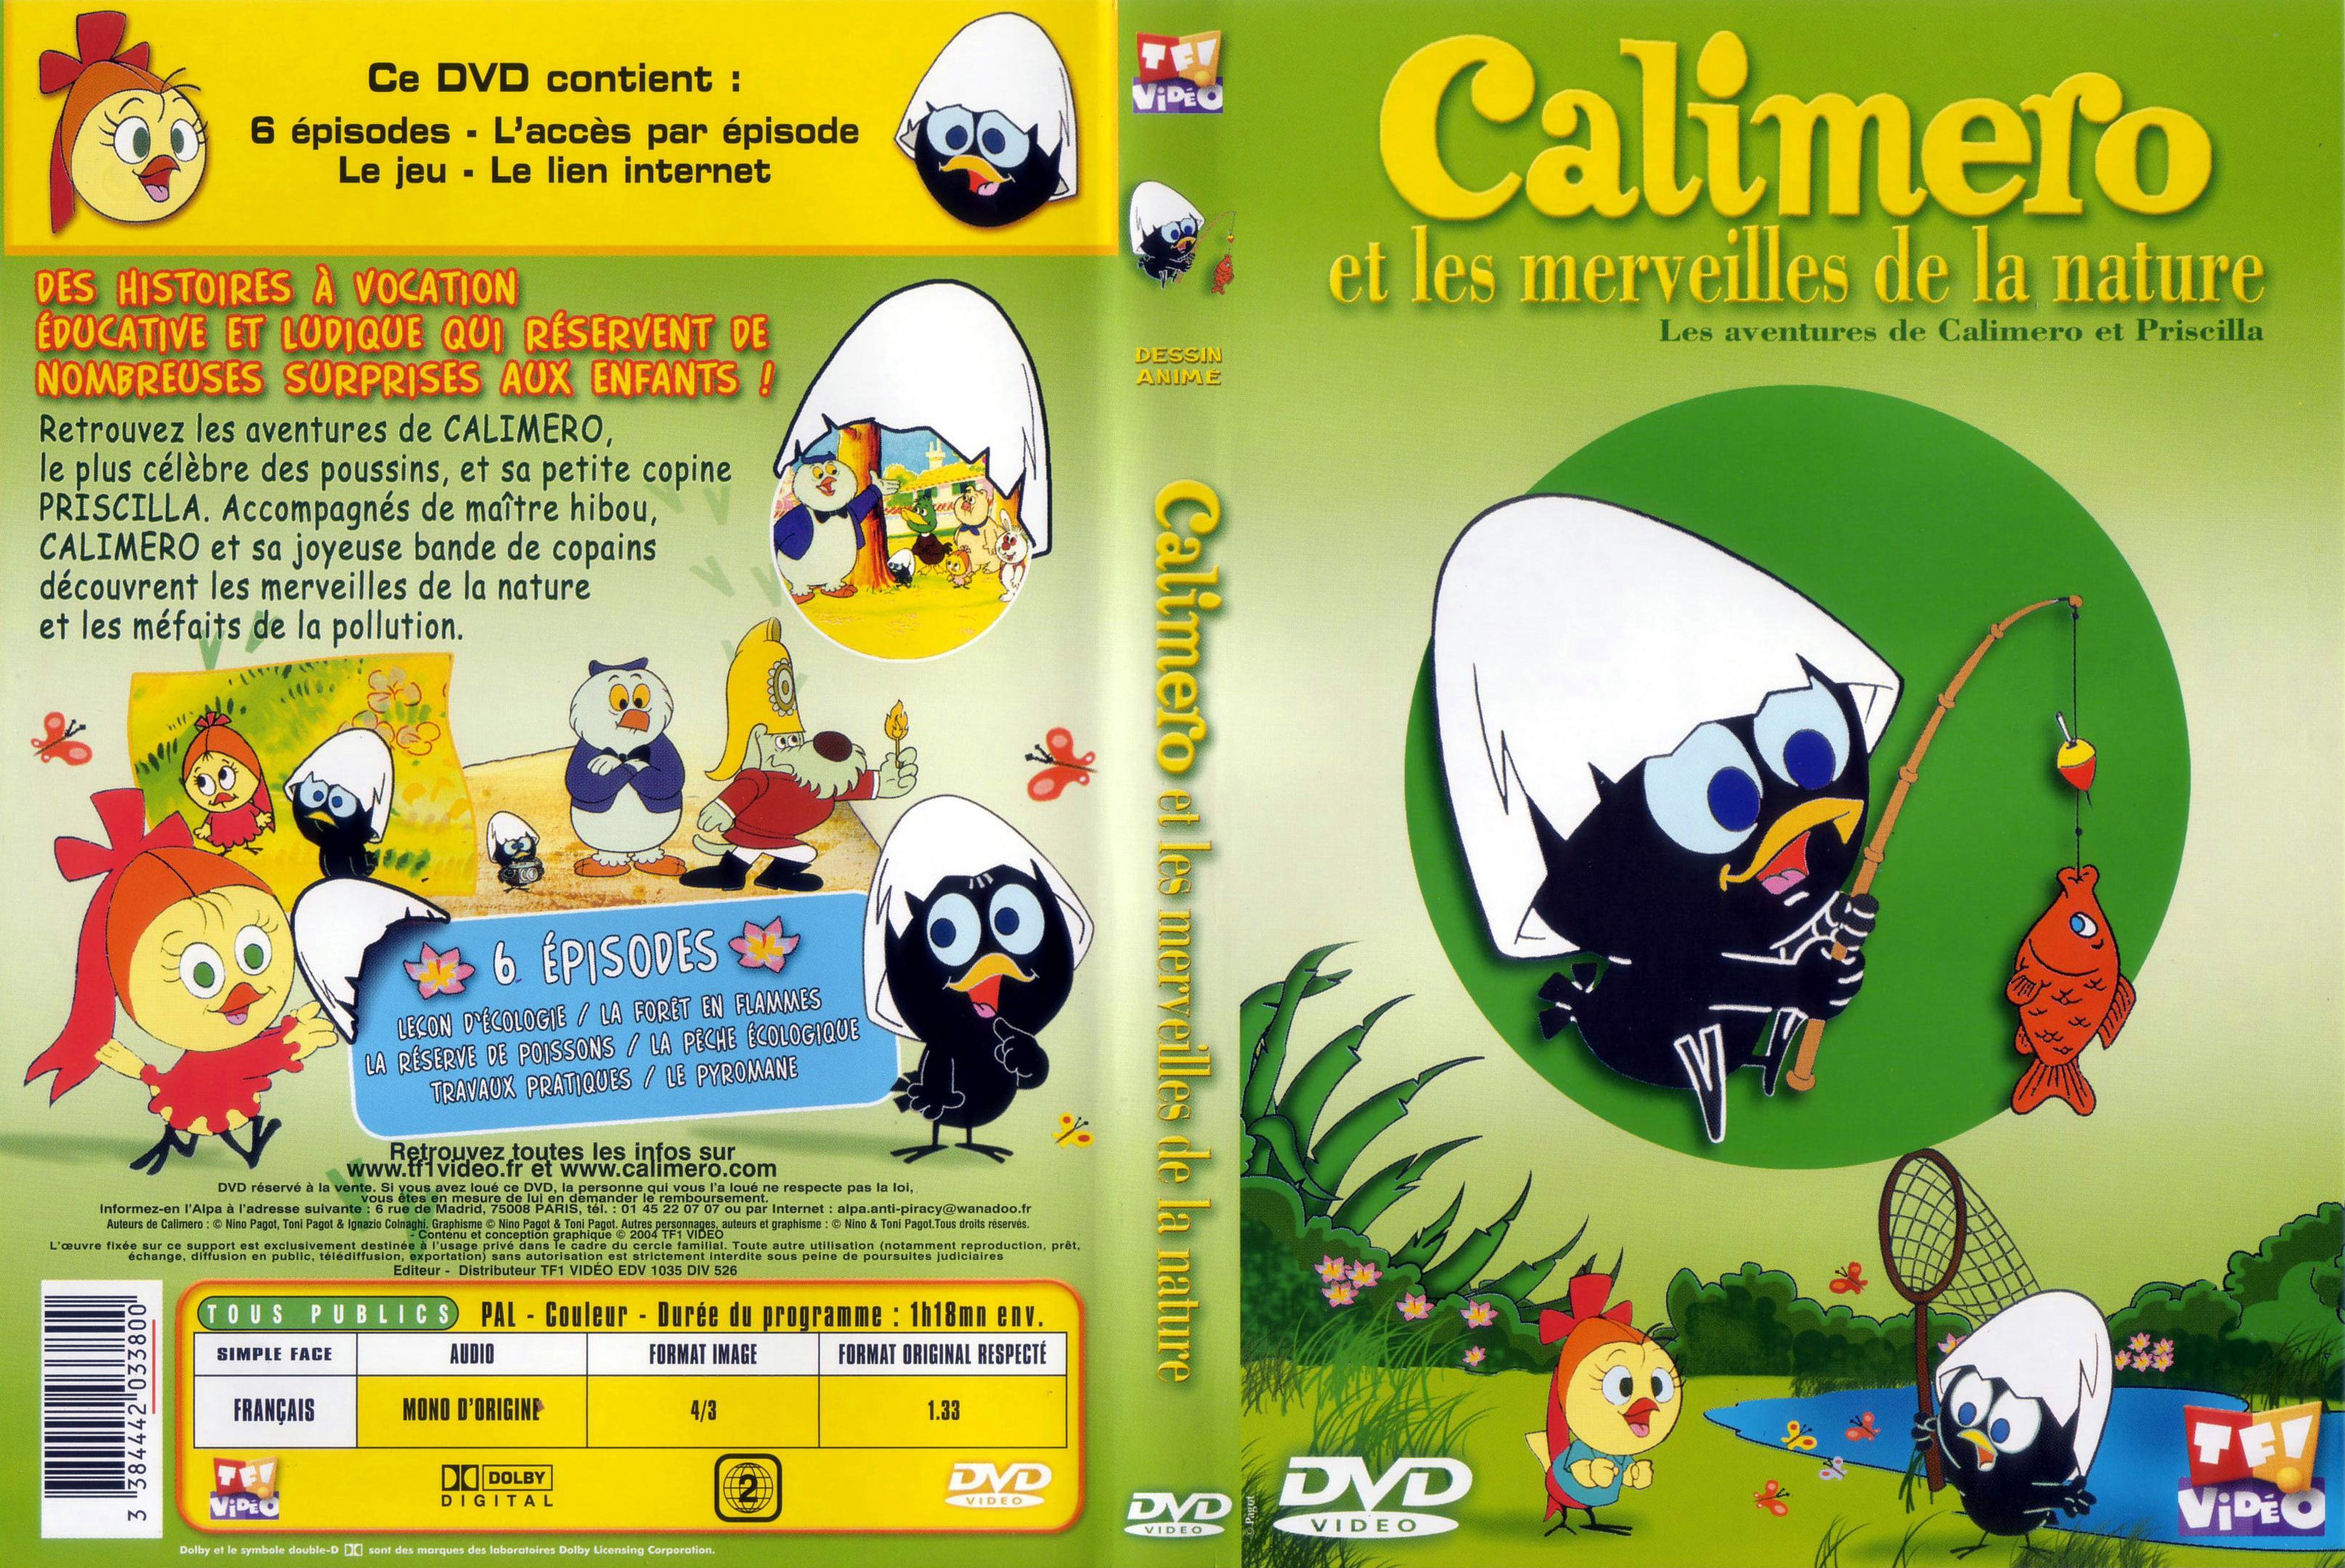 Jaquette DVD Calimero les merveilles de la nature